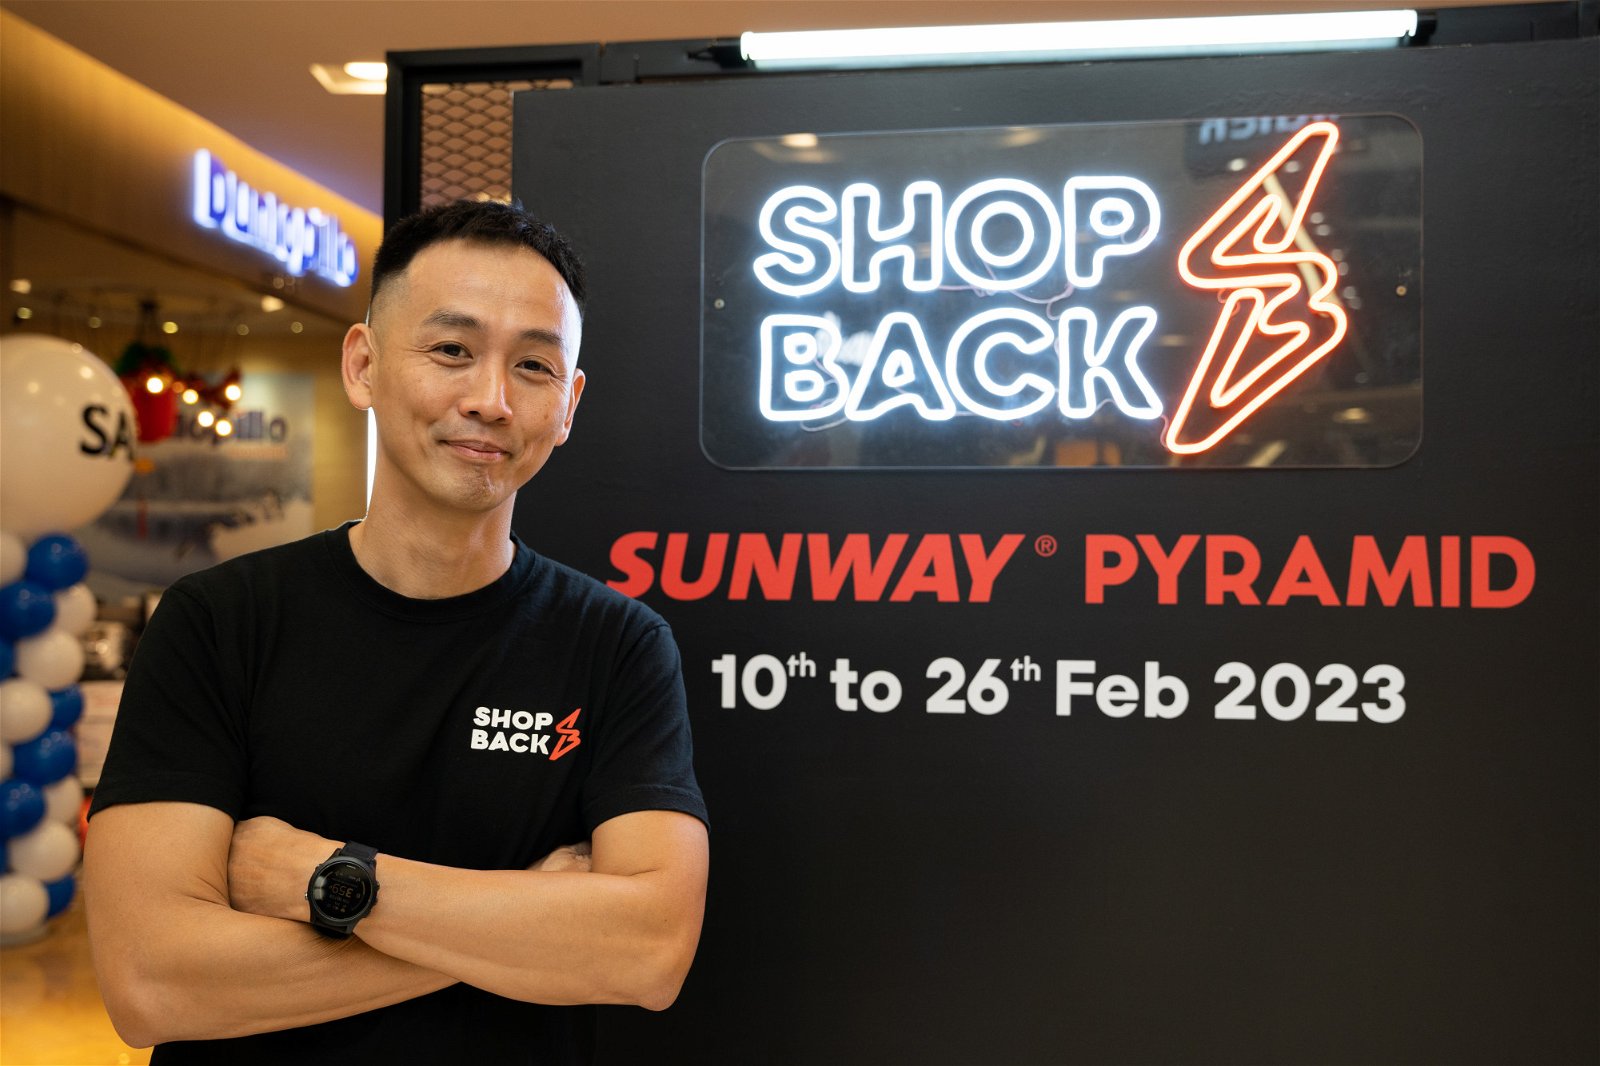 ShopBack 马来西亚总经理韩寿升说道，目前网路消费行为已经趋向于直接向品牌官网消费，而非电子商务市场。